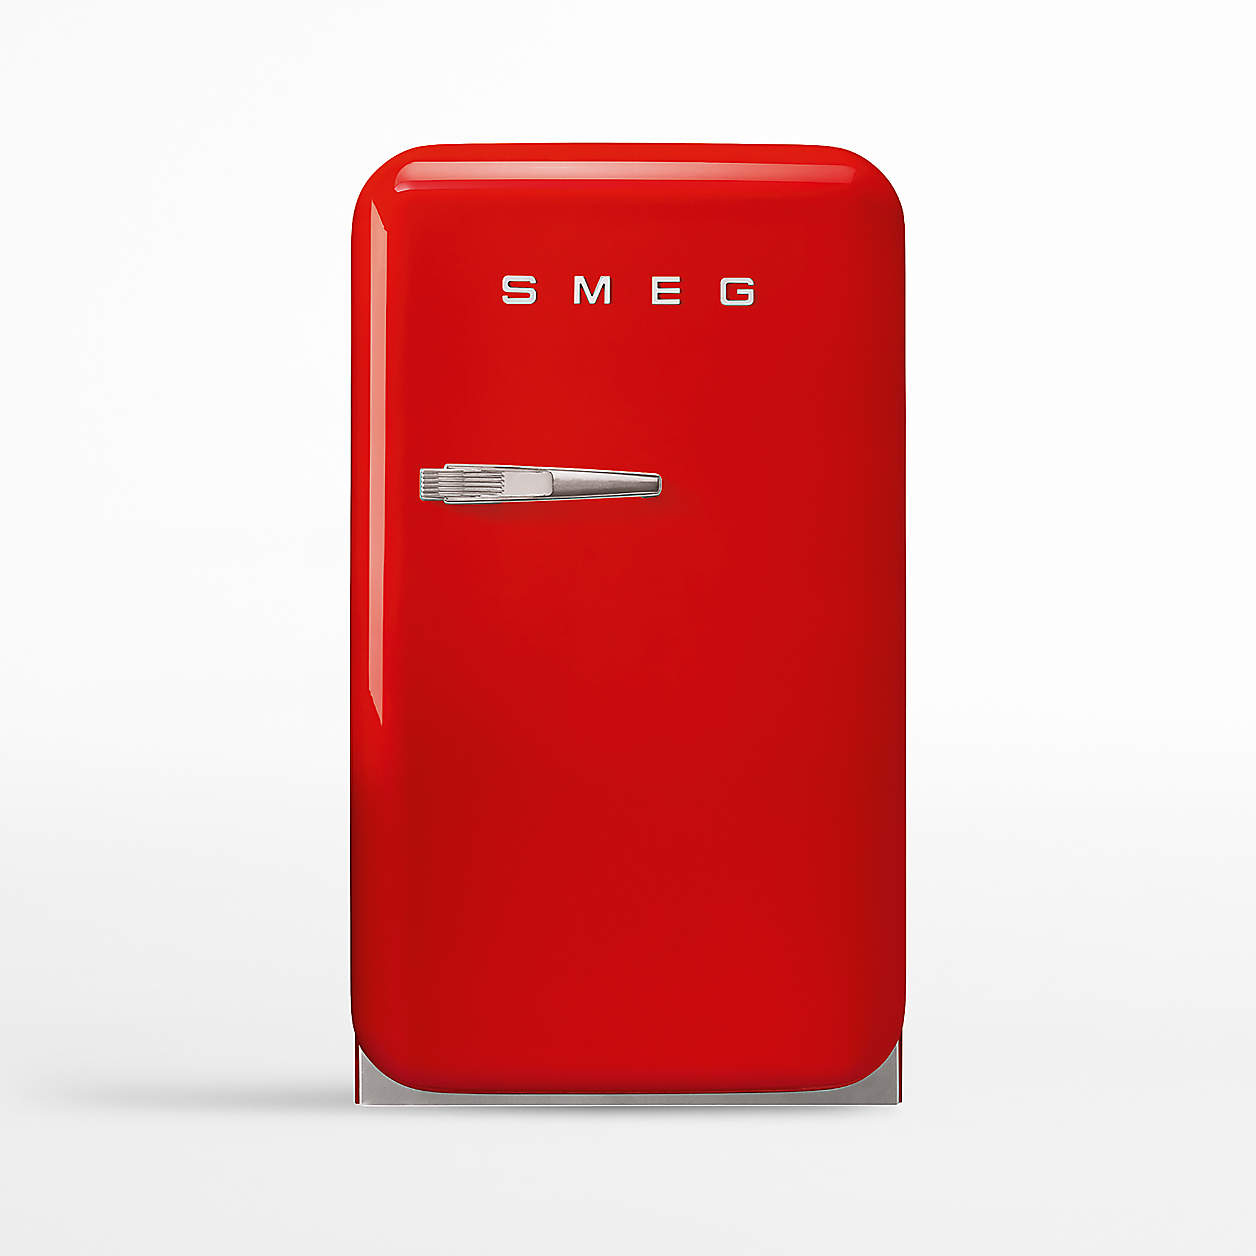 Smeg Red Mini Right-Hinge Refrigerator | Crate & Barrel